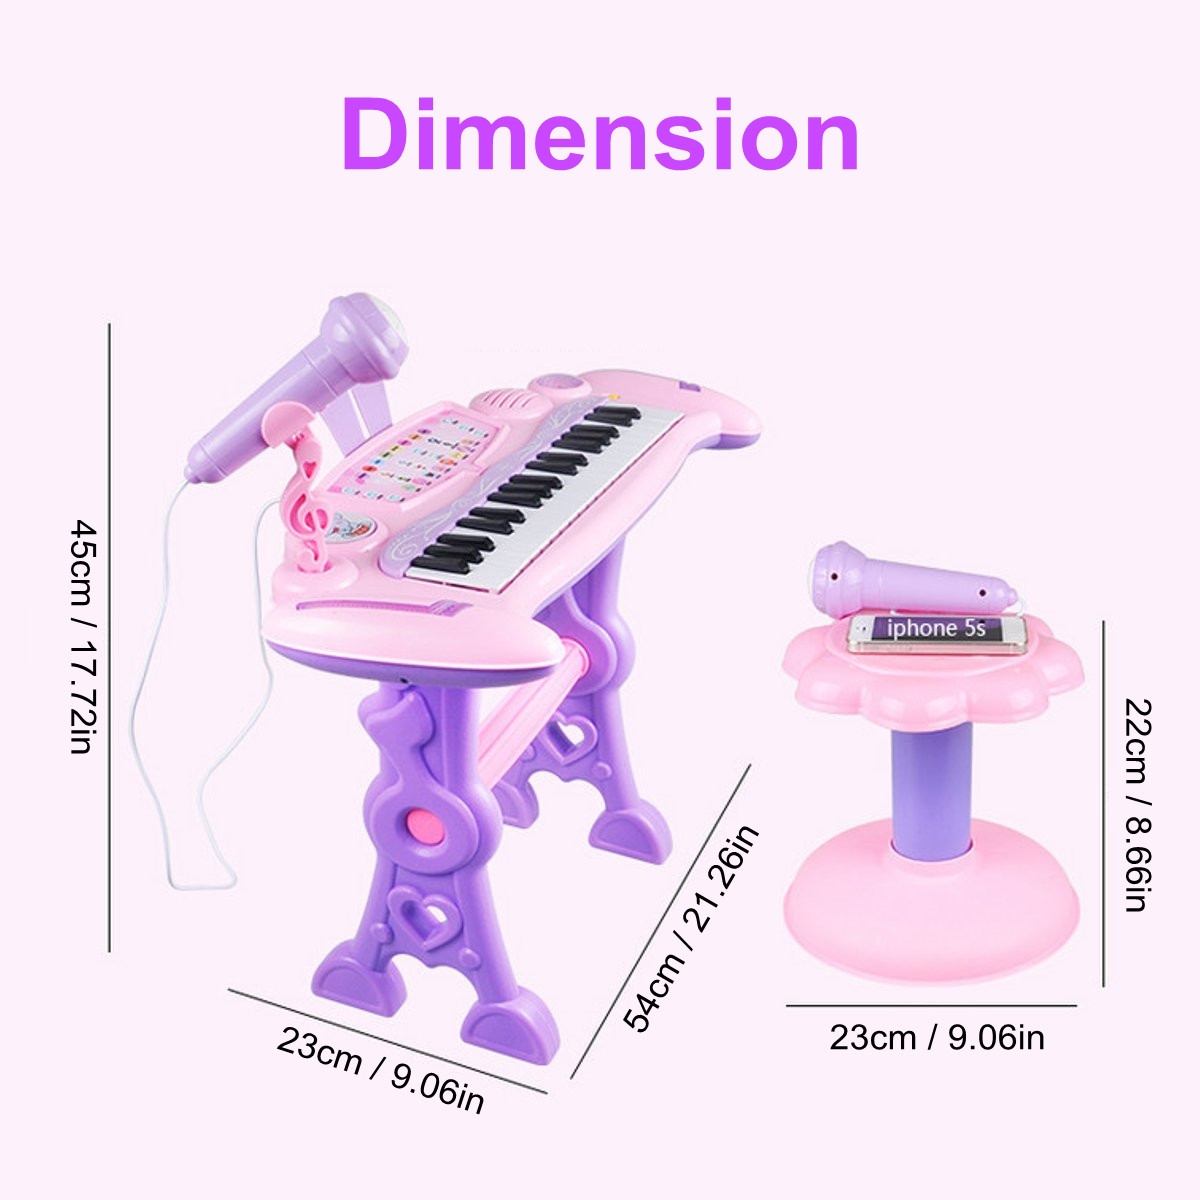 37 Key Electronic Keyboard Kids Mini Grand + Piano Stool Microphone Musical Toys